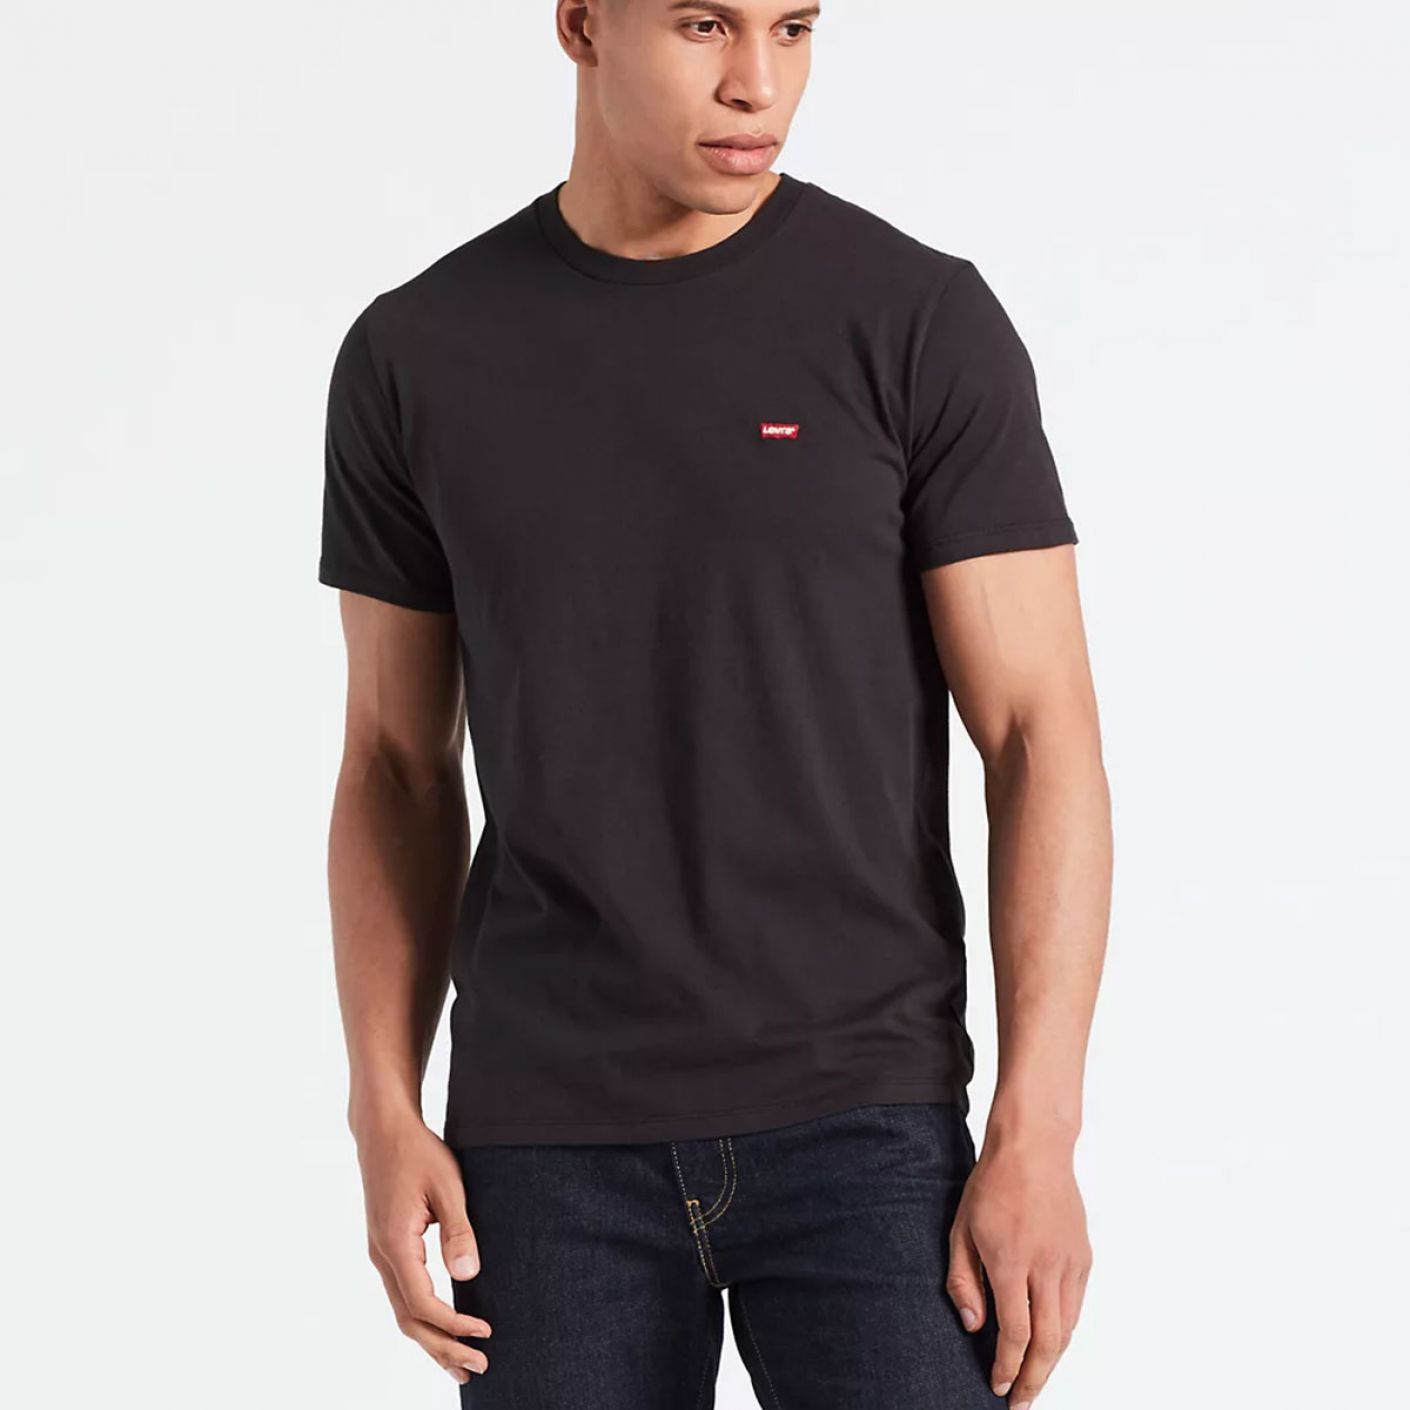 Levis T-Shirt Housemark Original Black